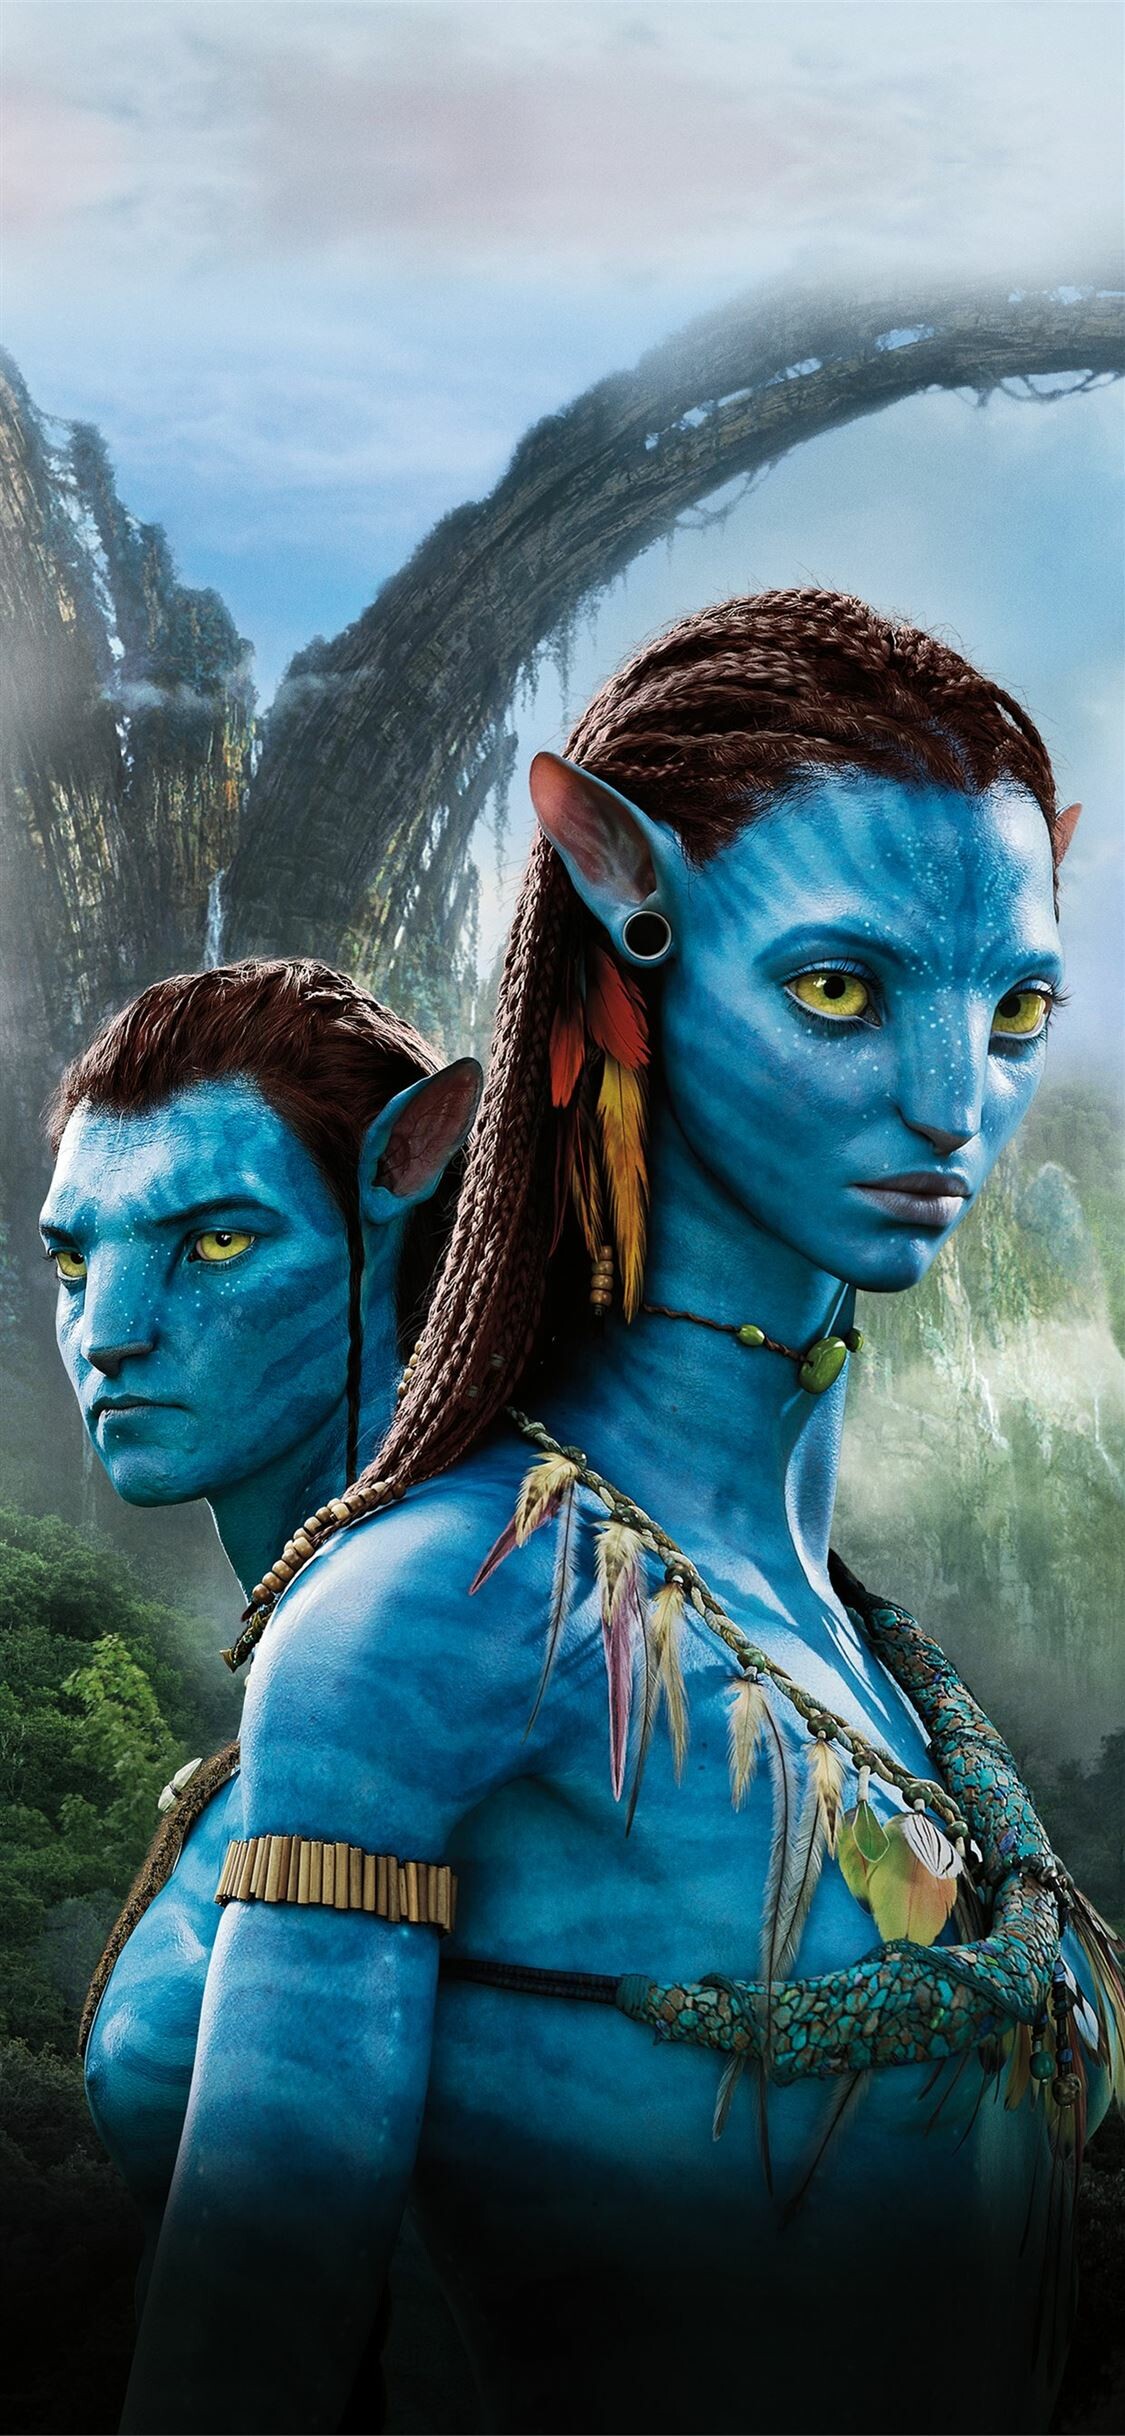 Avatar wallpaper, Sci-fi wonder, James Cameron's vision, Mesmerizing visuals, 1130x2440 HD Phone